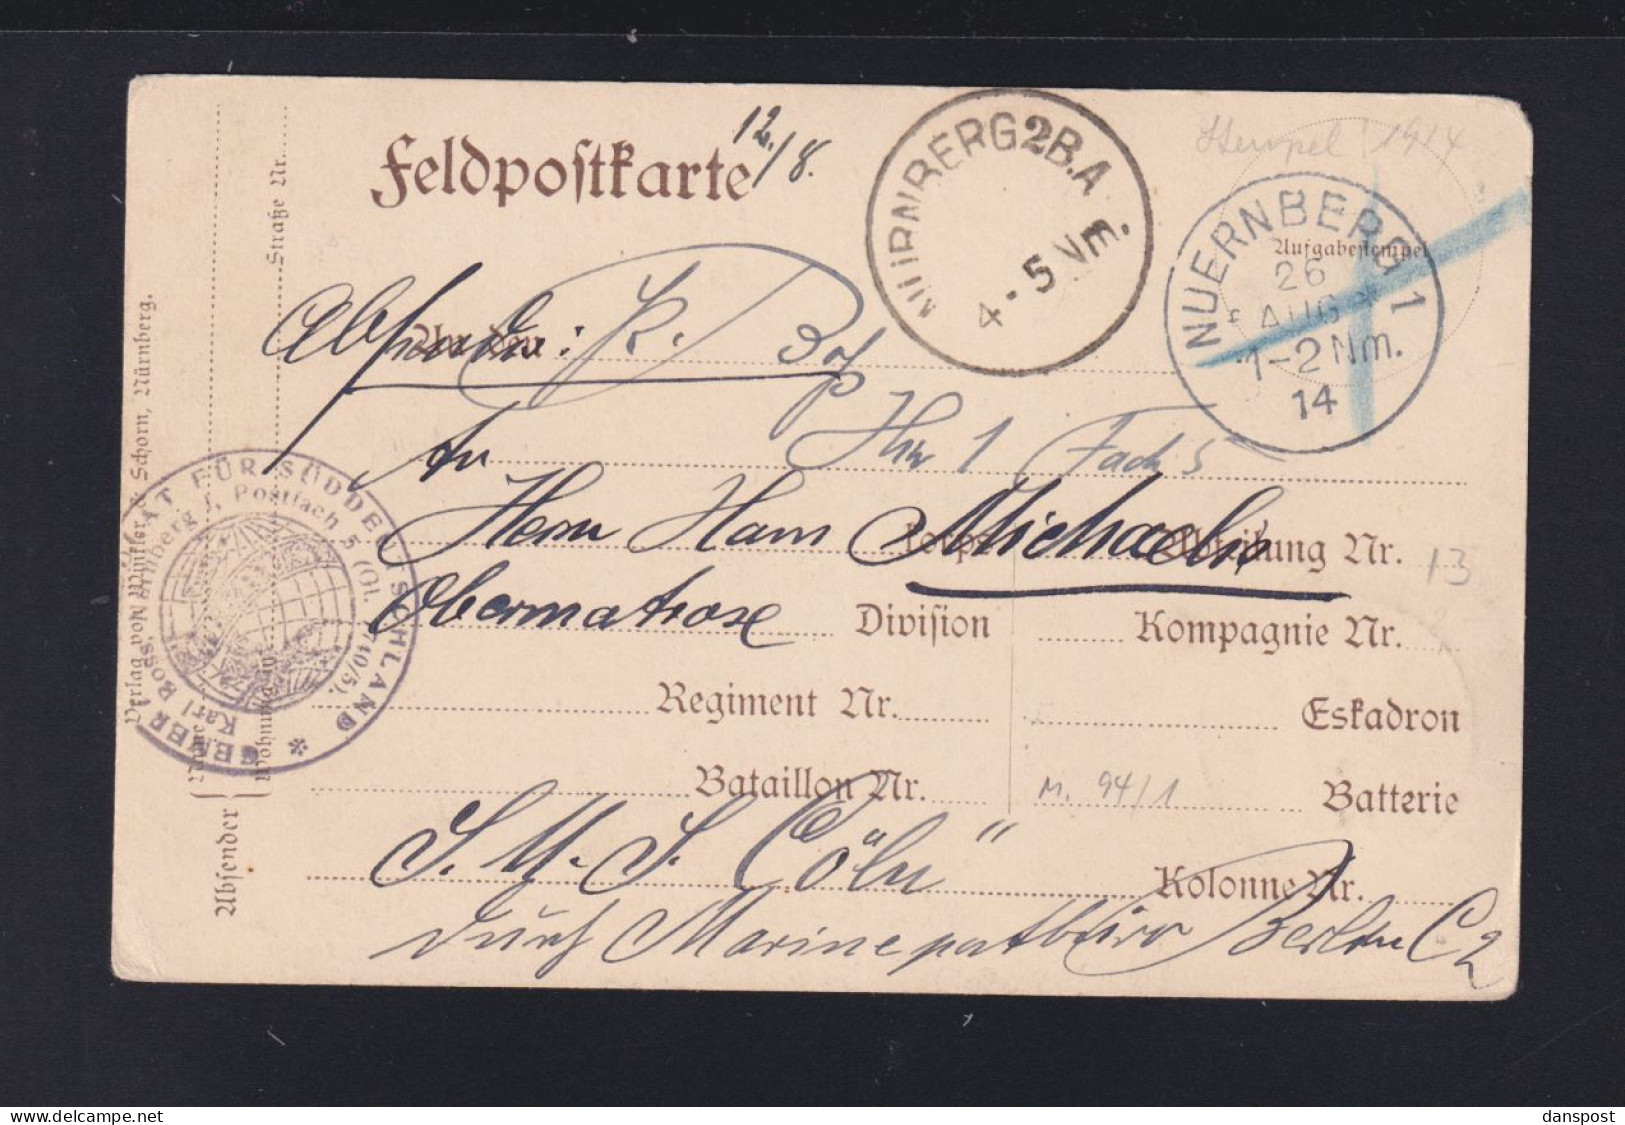 Bayern AK Nürnberg 1914 An SMS Köln - Lettres & Documents